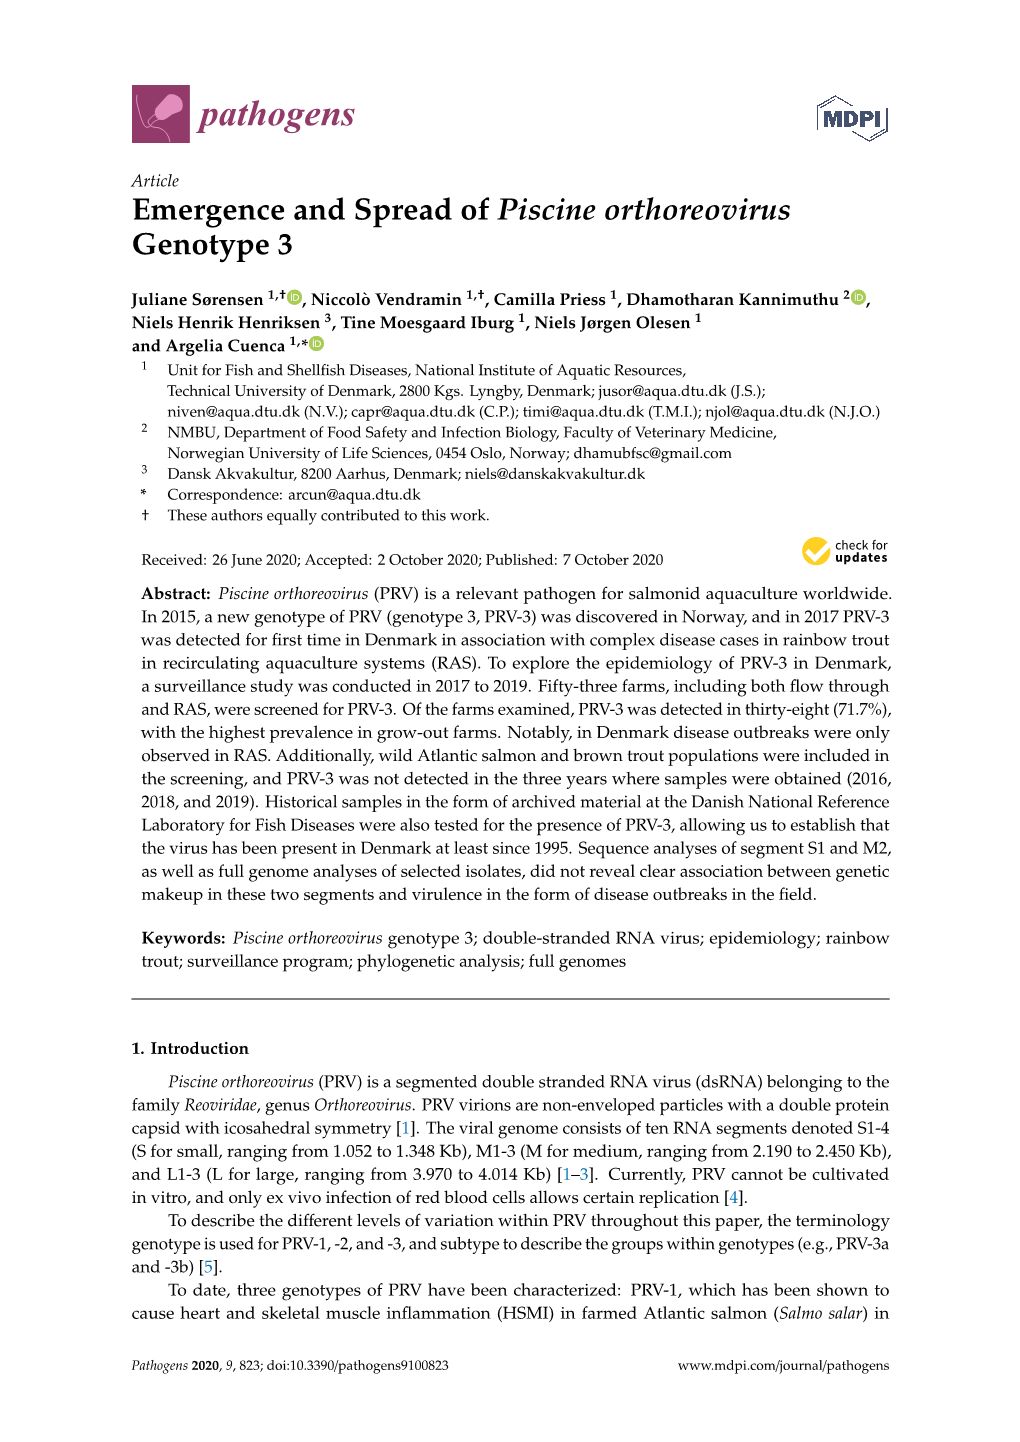 Emergence and Spread of Piscine Orthoreovirus Genotype 3